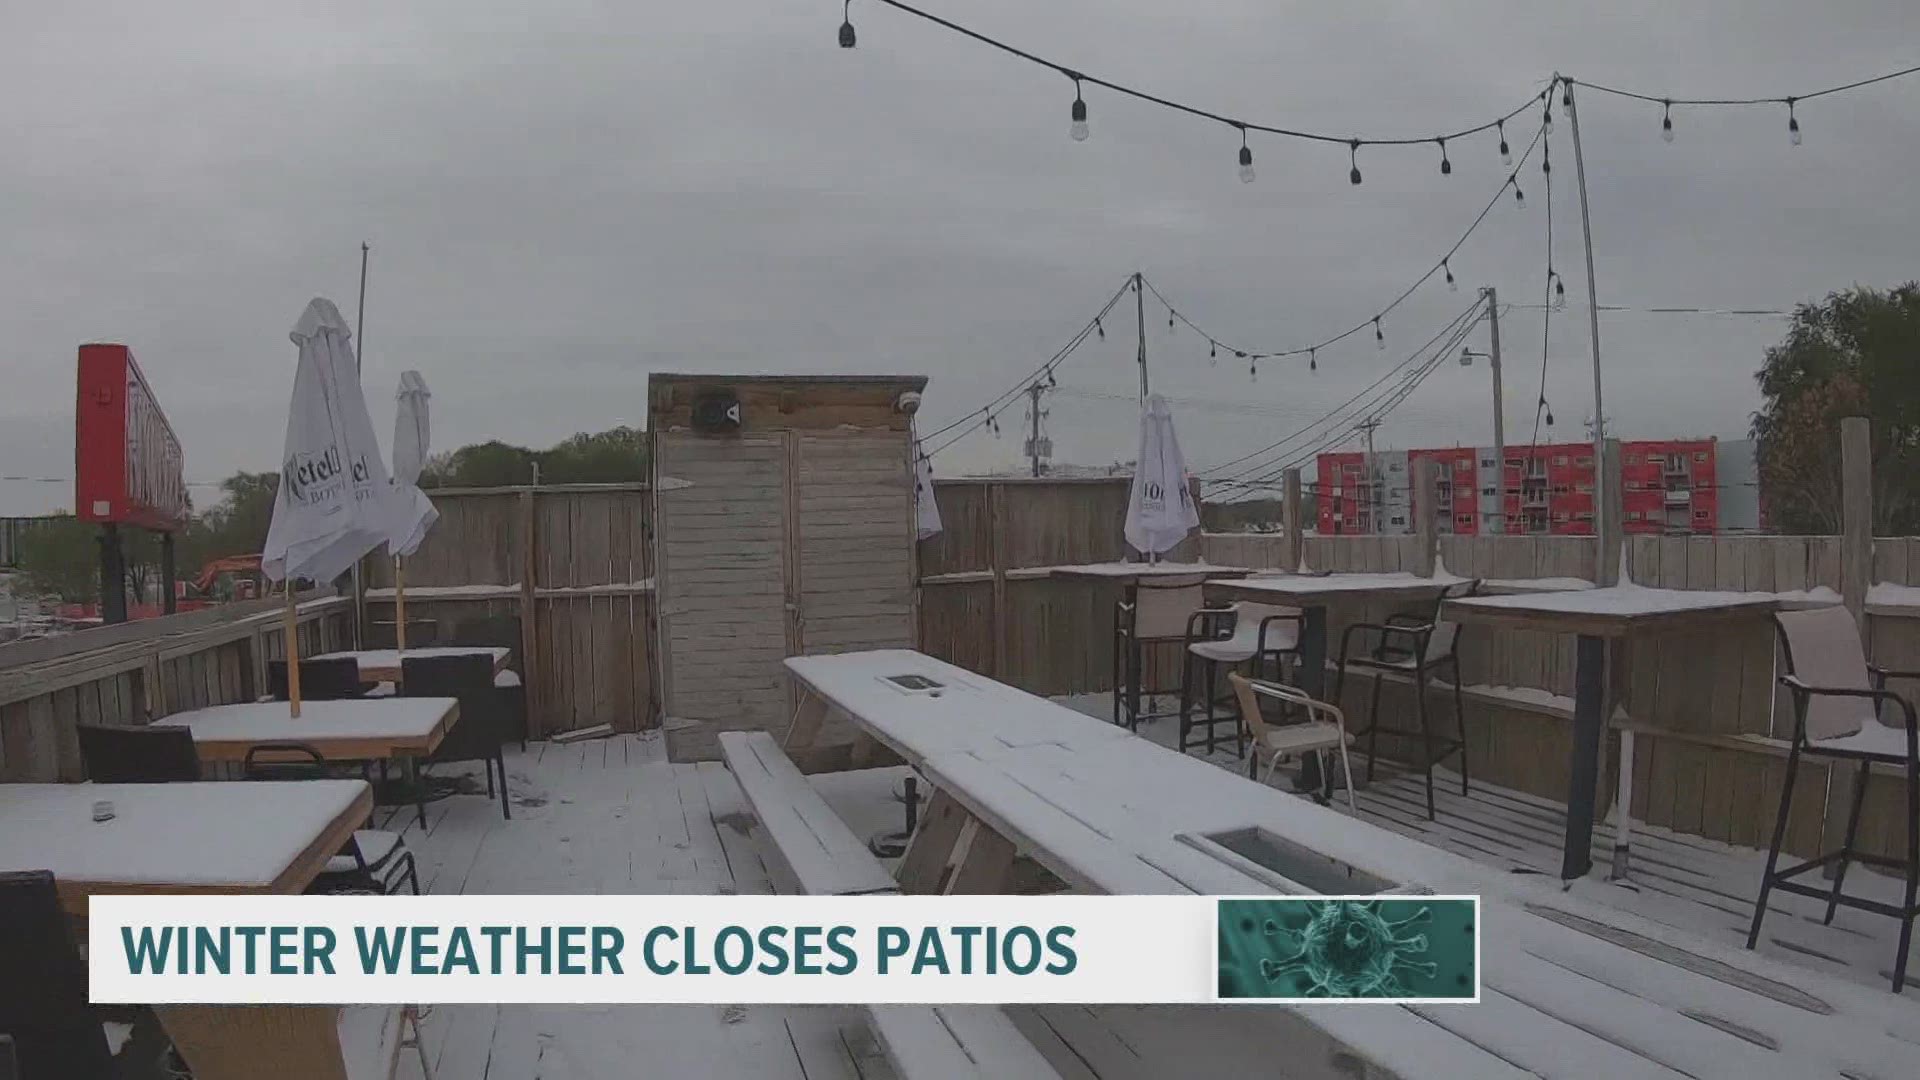 Iowans fear Covid at restaurants with patios closing